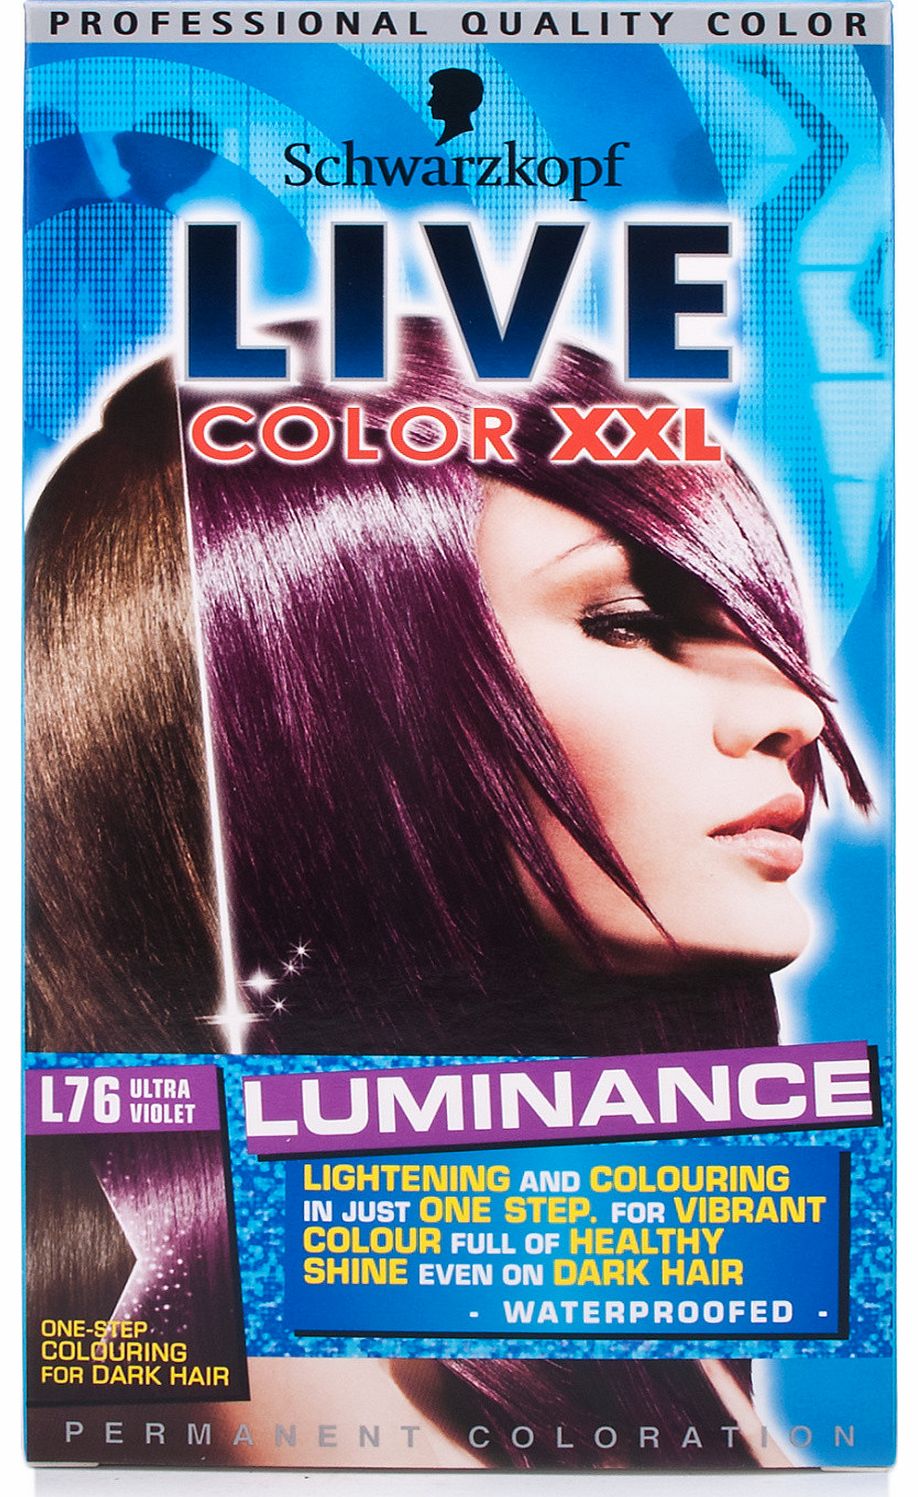 Live Colour XXL Luminance L76 Ultra